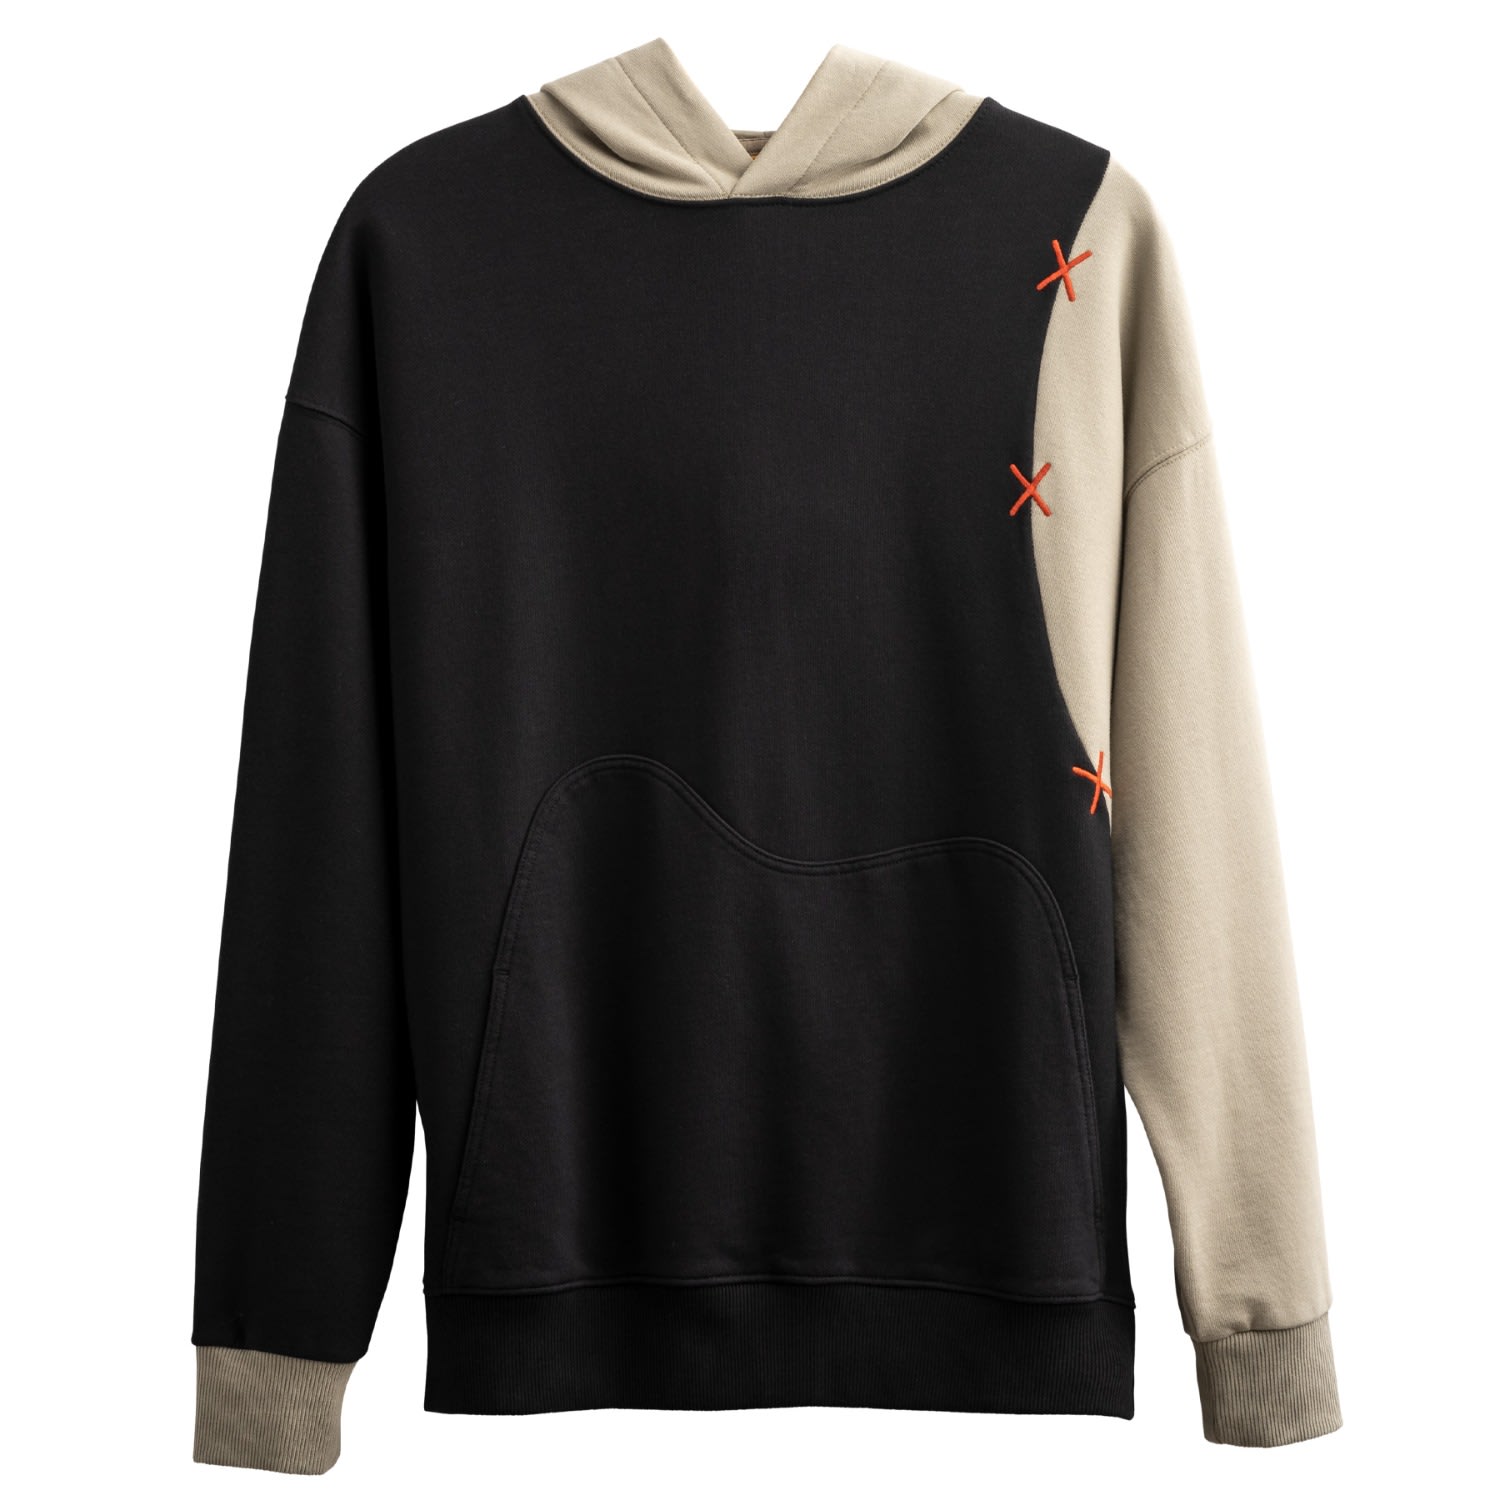 Men's Black Unisex Design Hoodie Sweatshirt - Oileka - Tar Extra Small KAFT